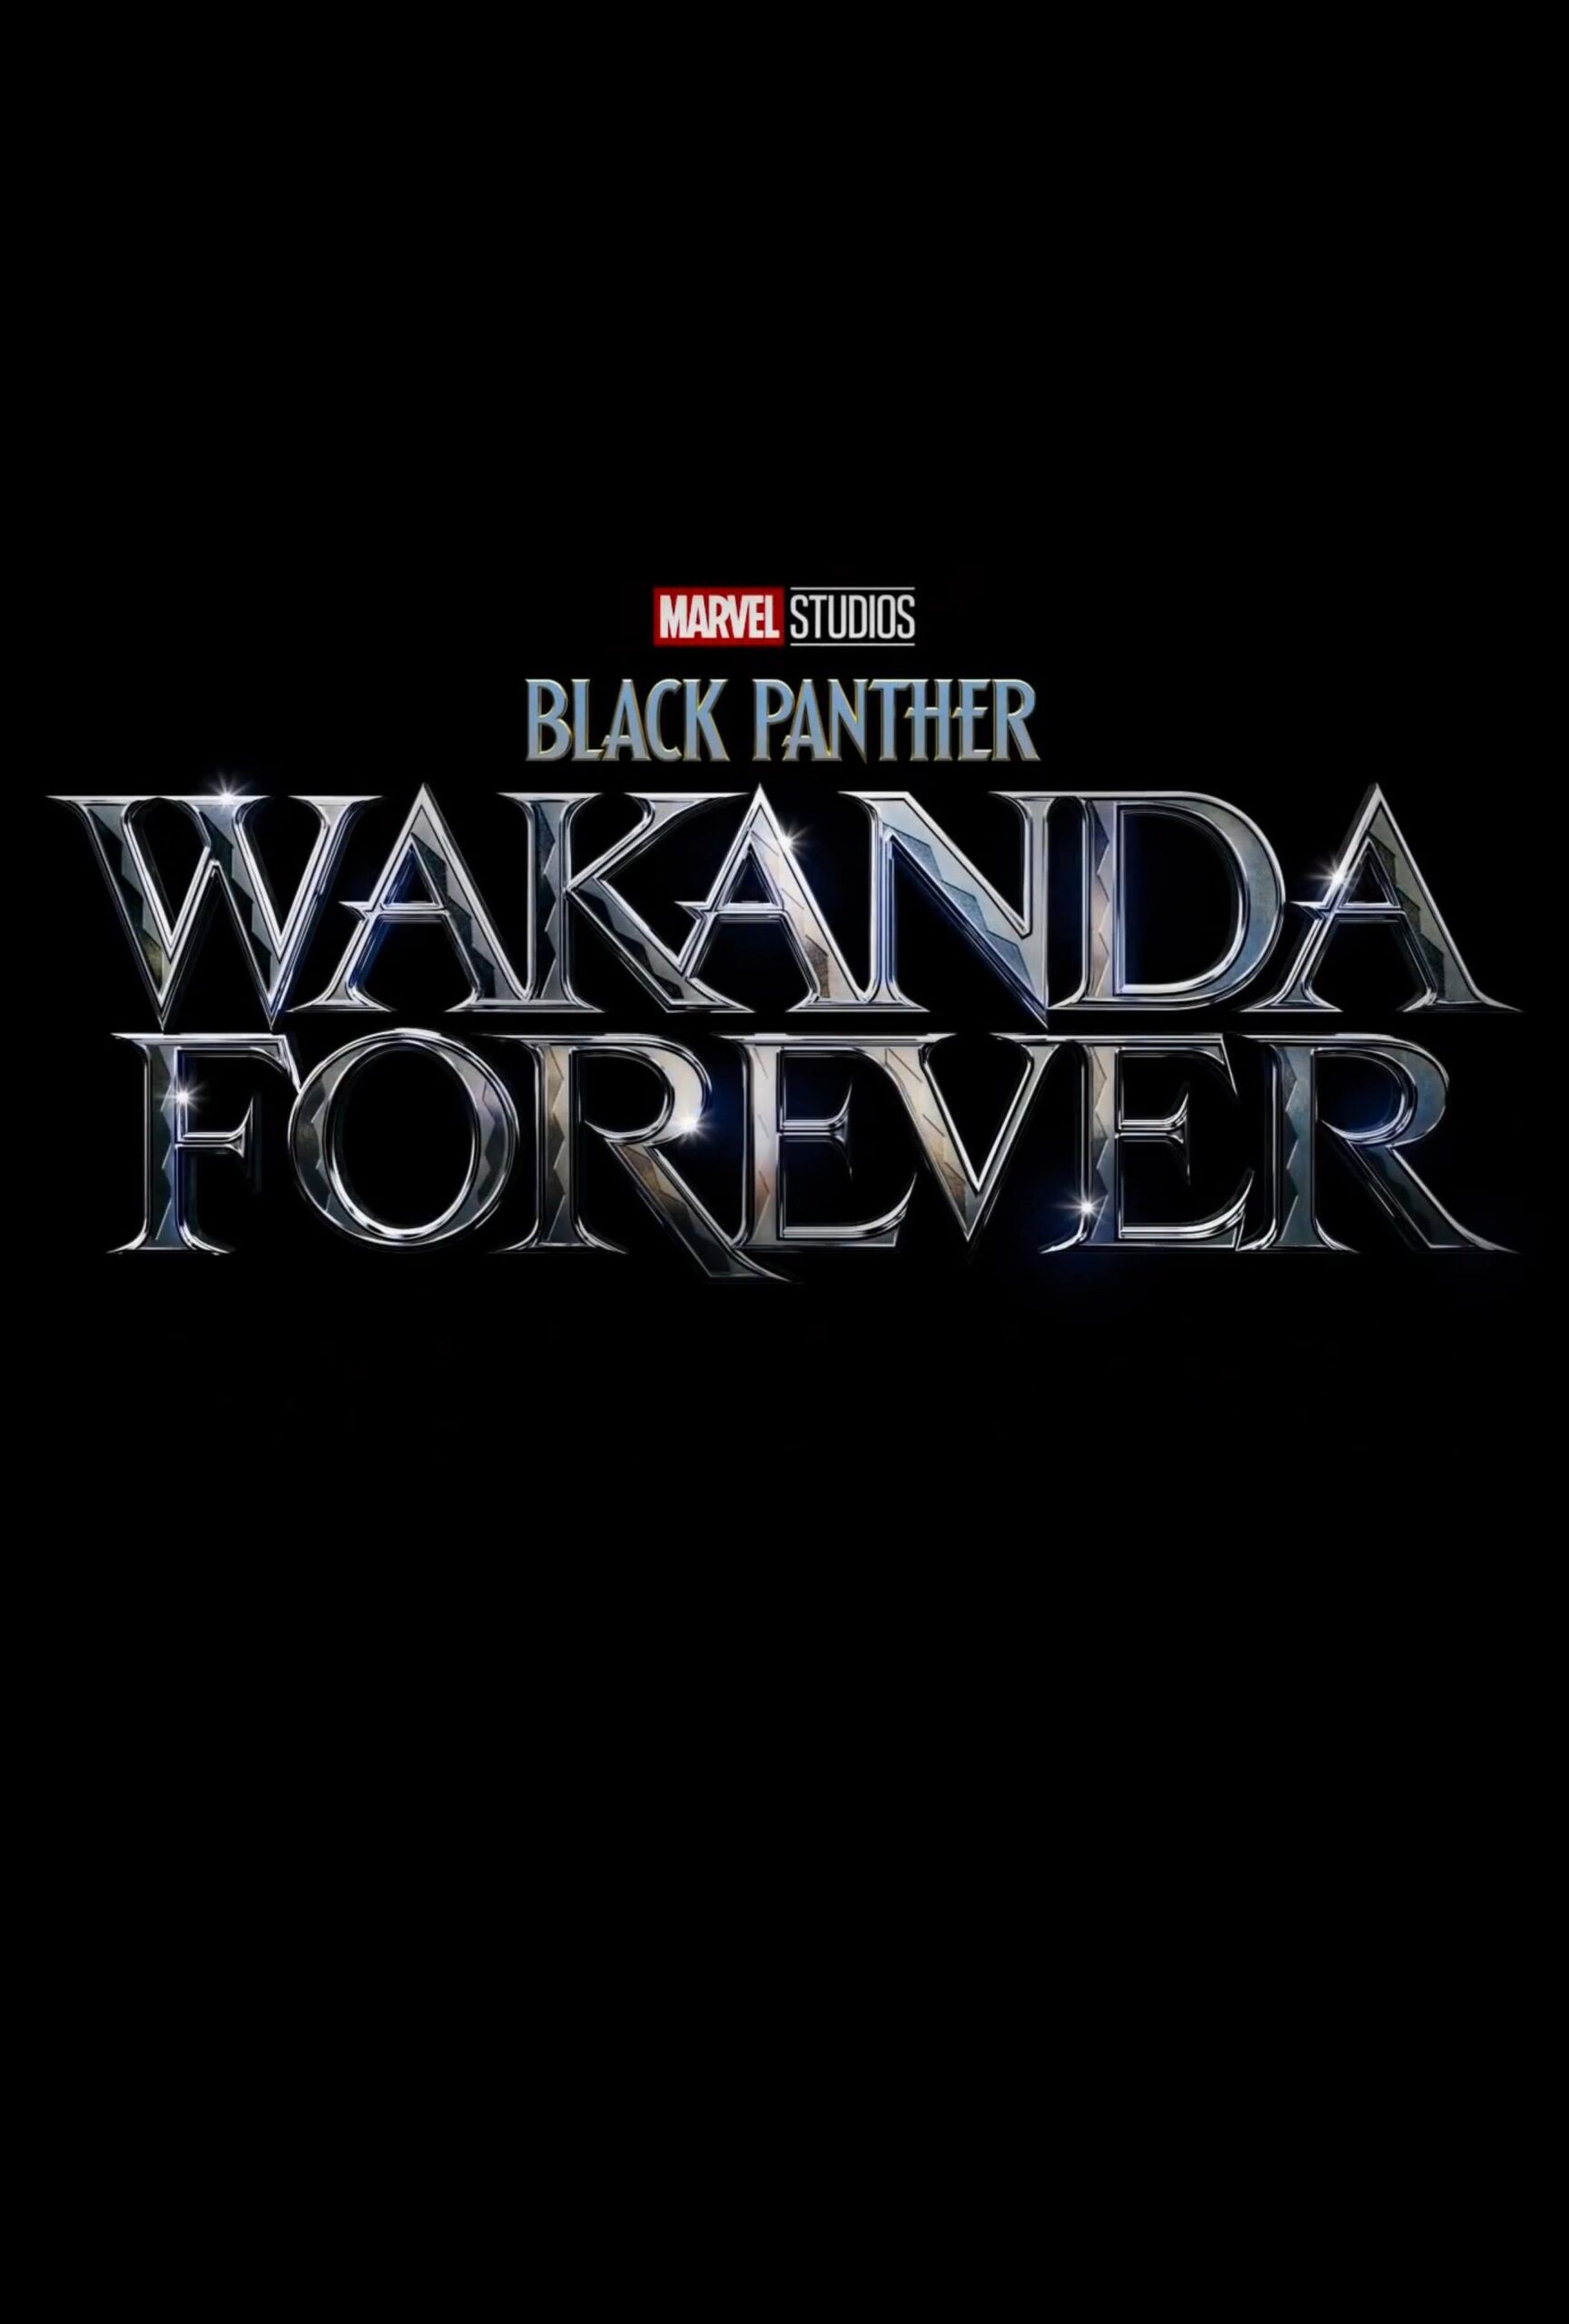 Black Panther Wakanda Forever poster image